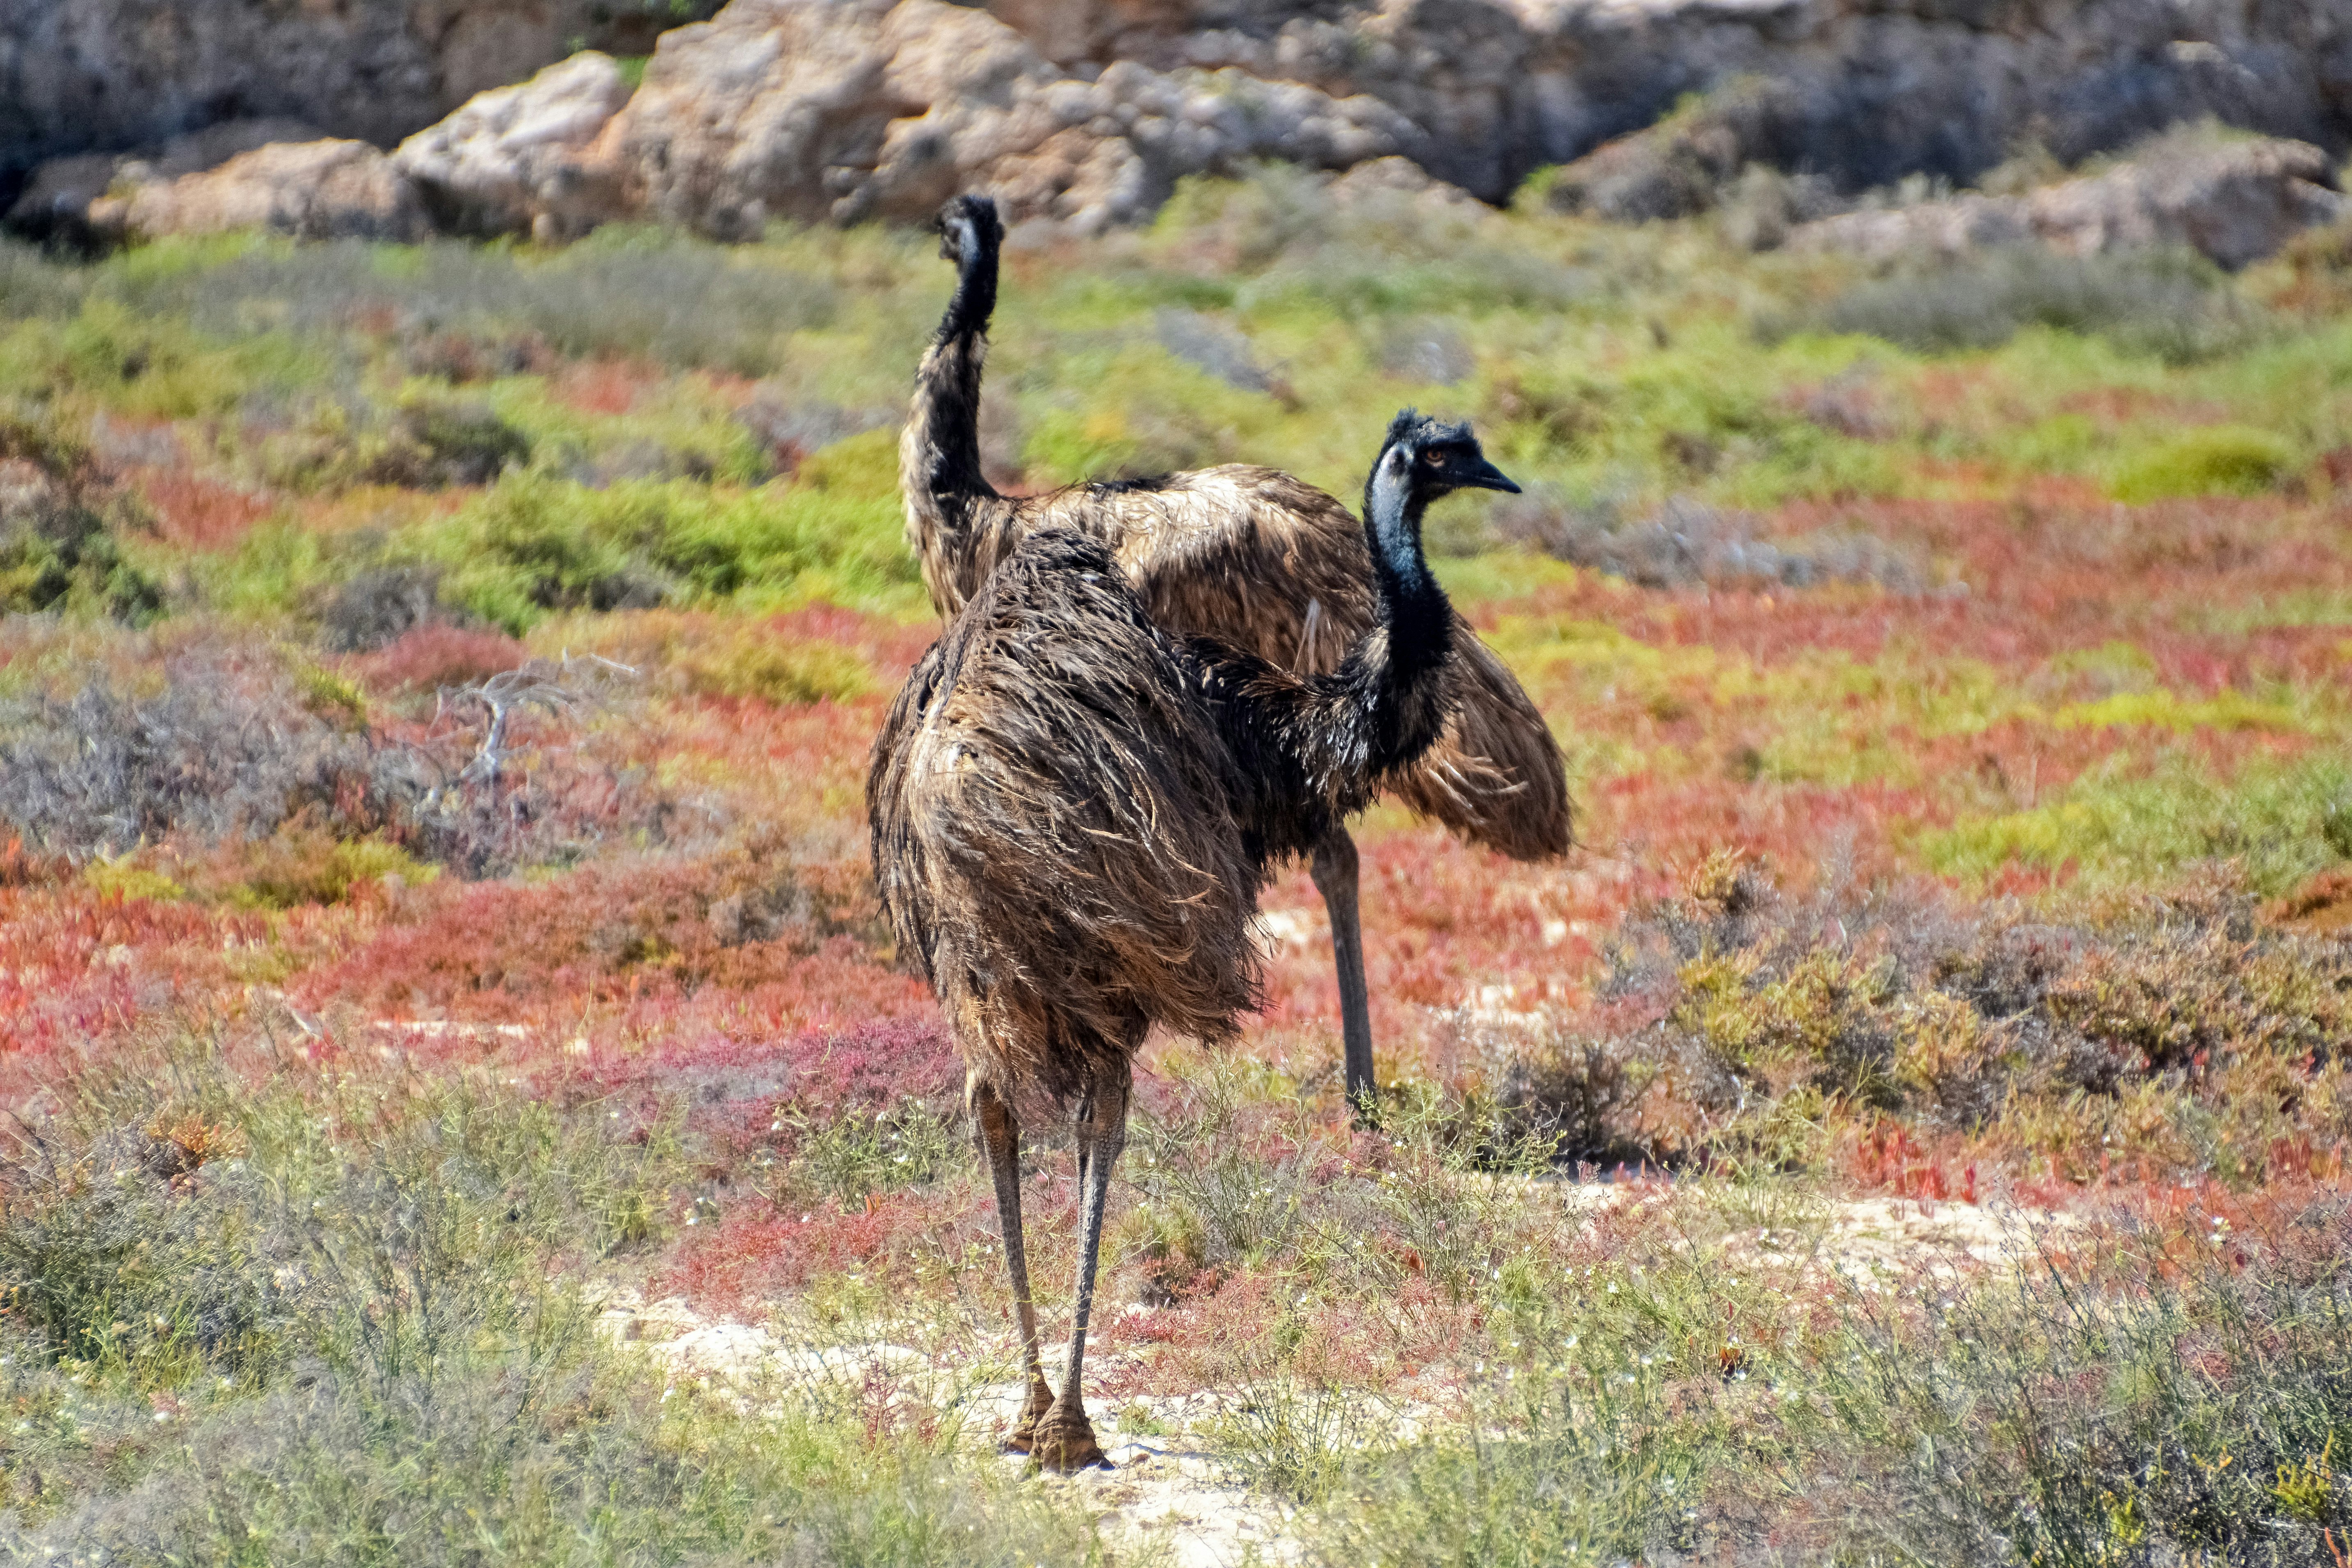 black ostrich walking on green grass field during daytime